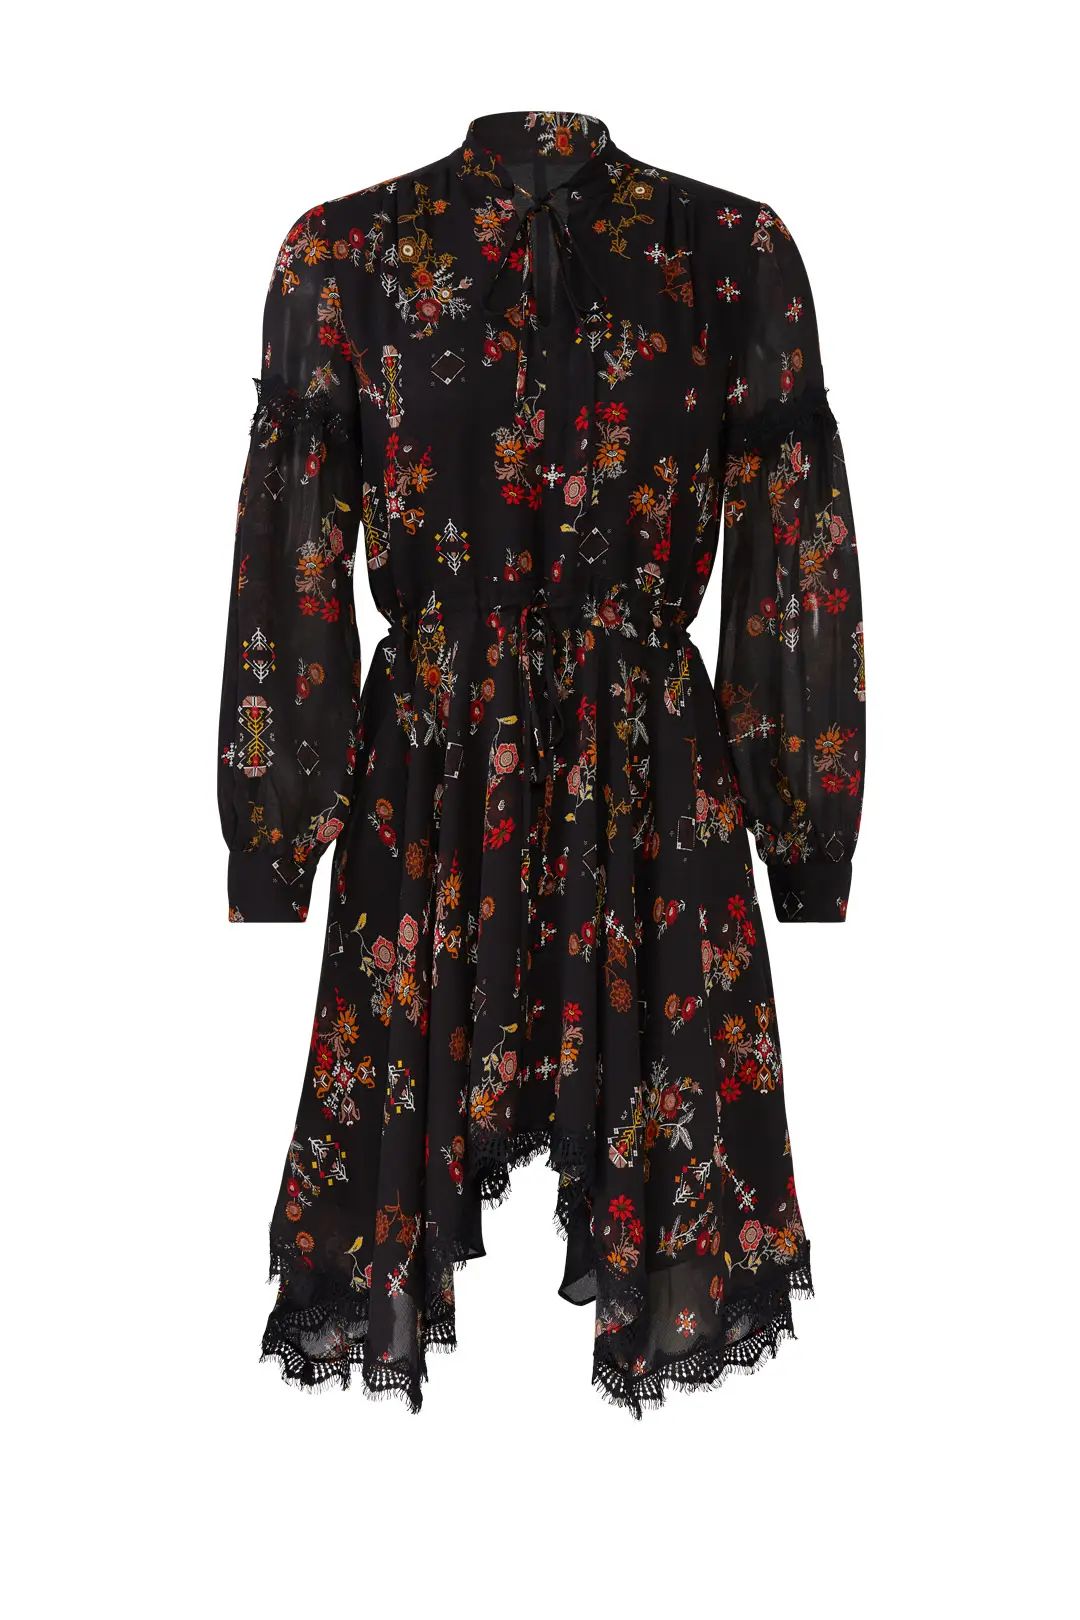 Derek Lam 10 Crosby Floral Handkerchief Dress | Rent The Runway